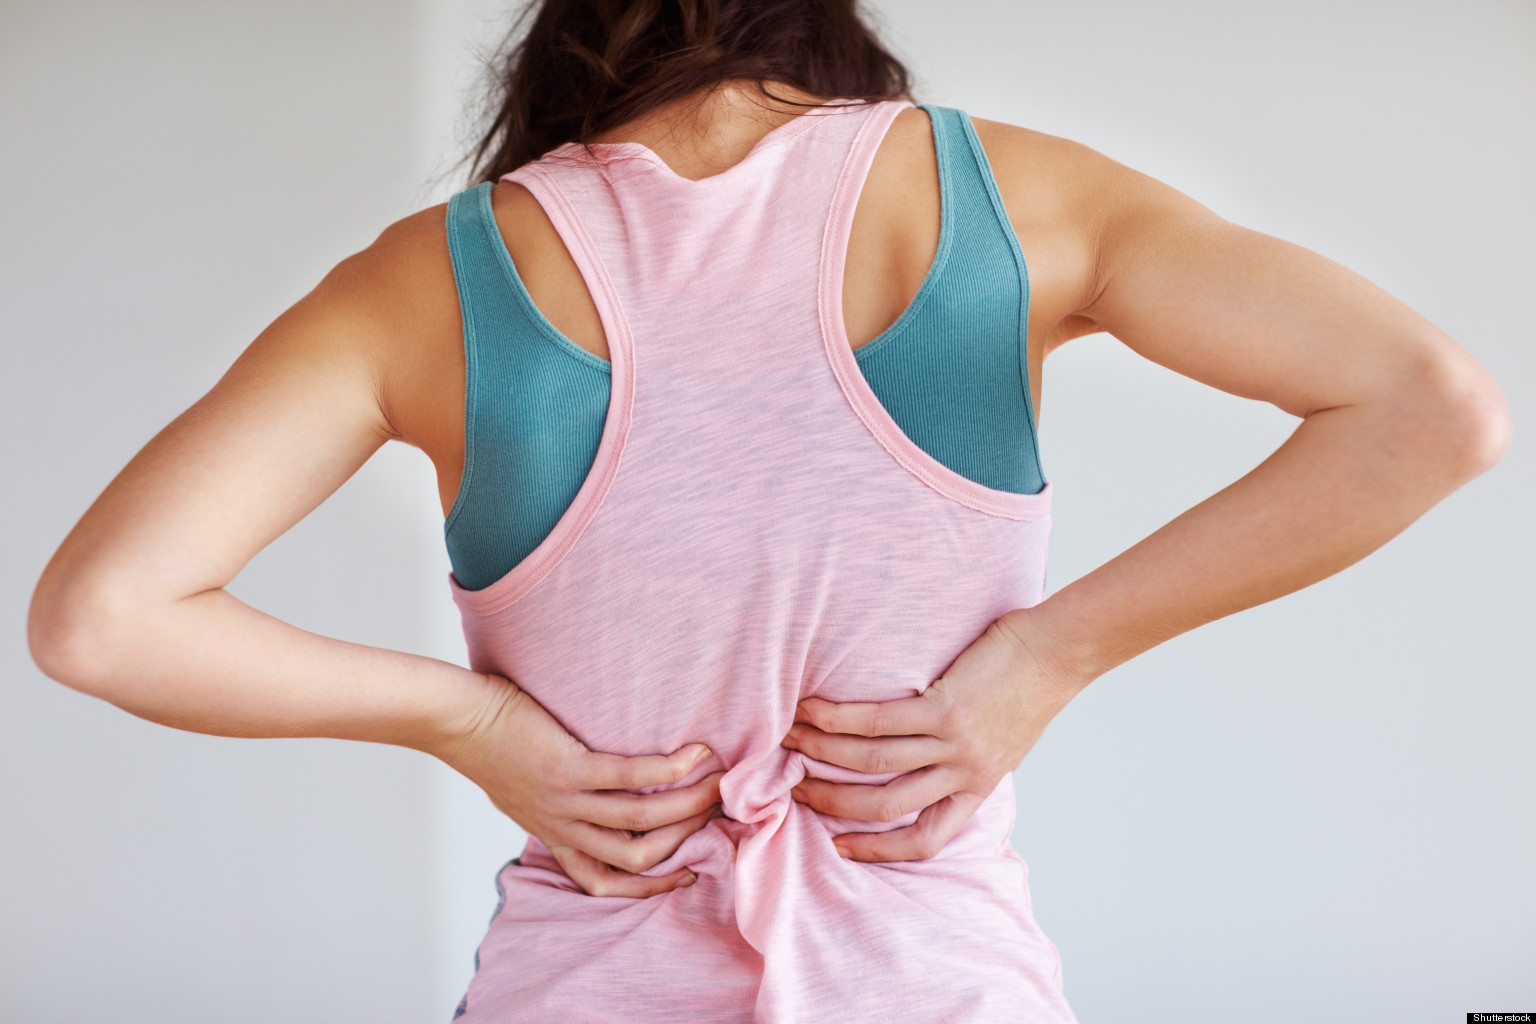 Habits that hurt your back